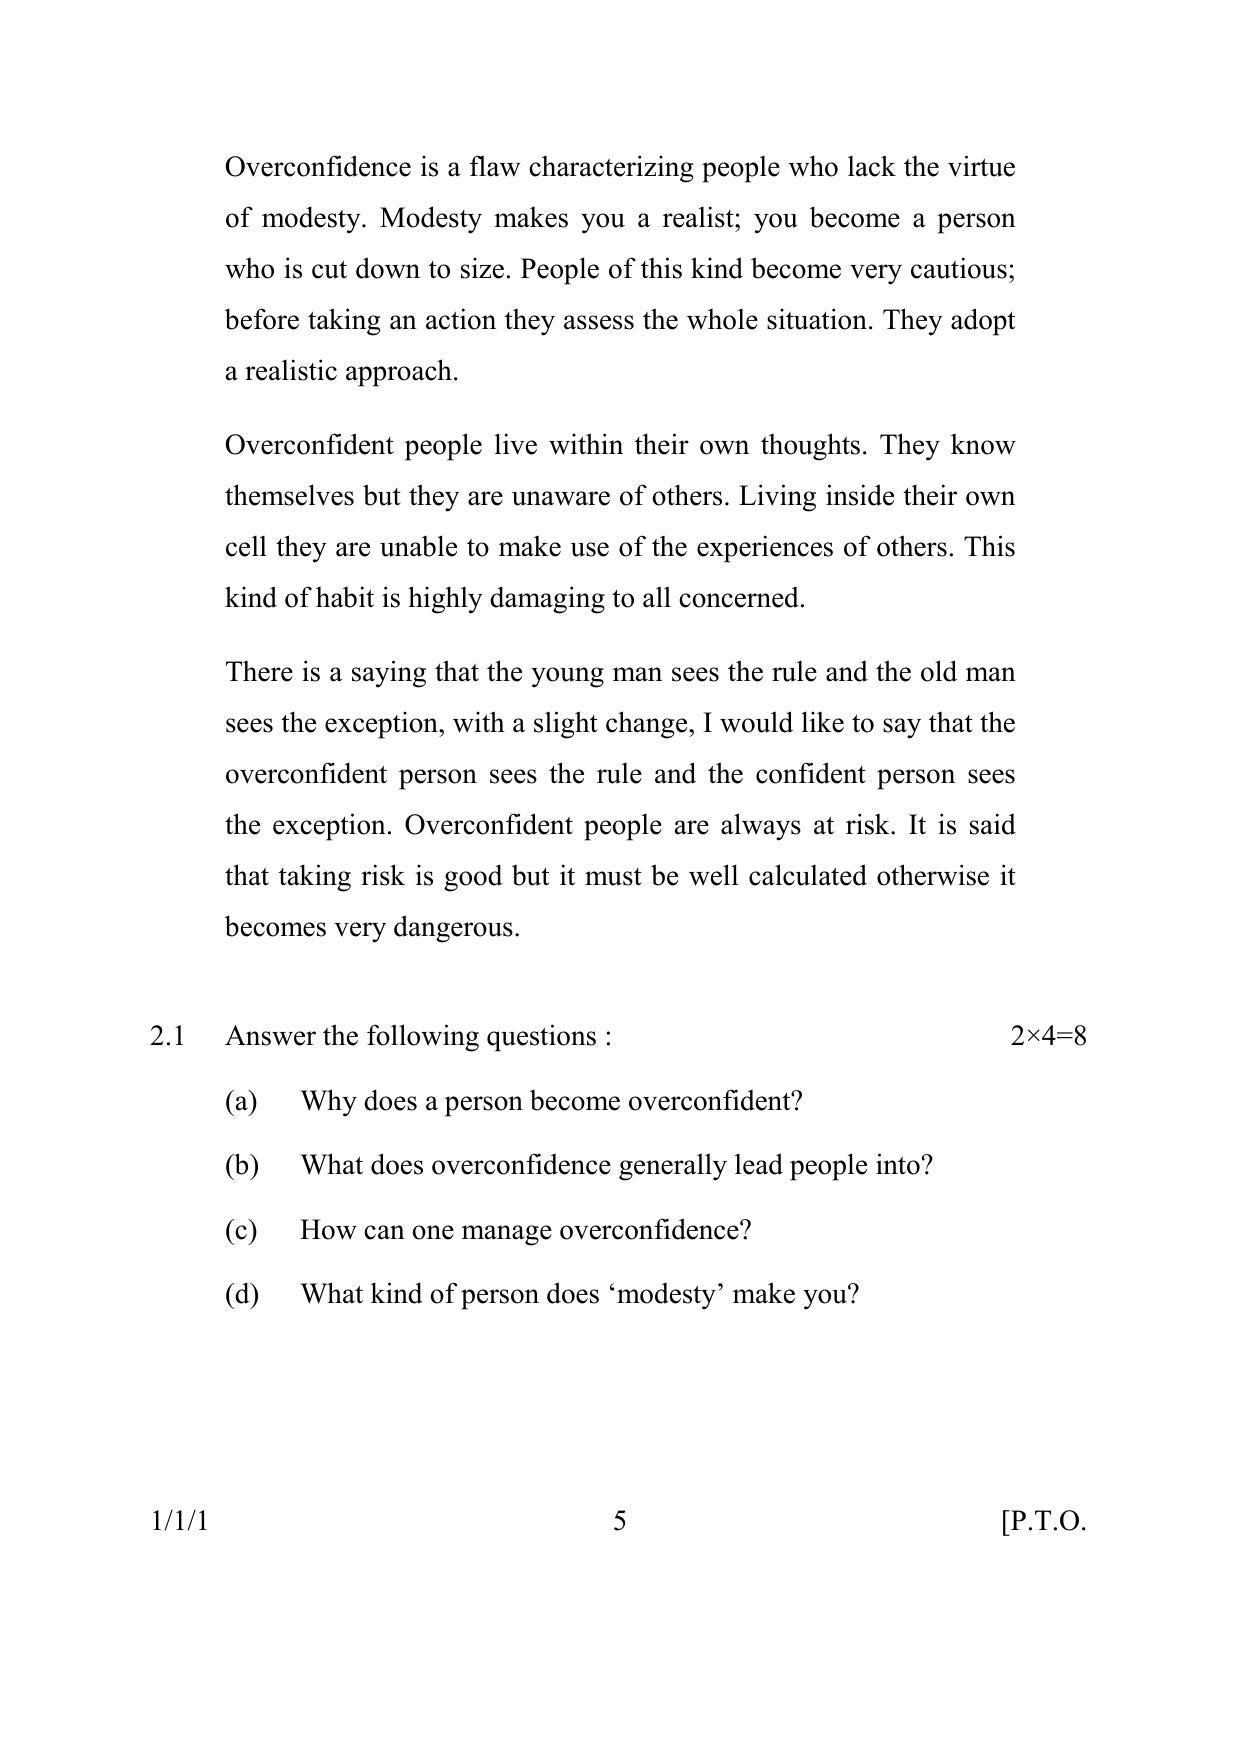 CBSE Class 10 1-1-1 ENGLISH COMMUNICATIVE 2016 Question Paper - Page 5